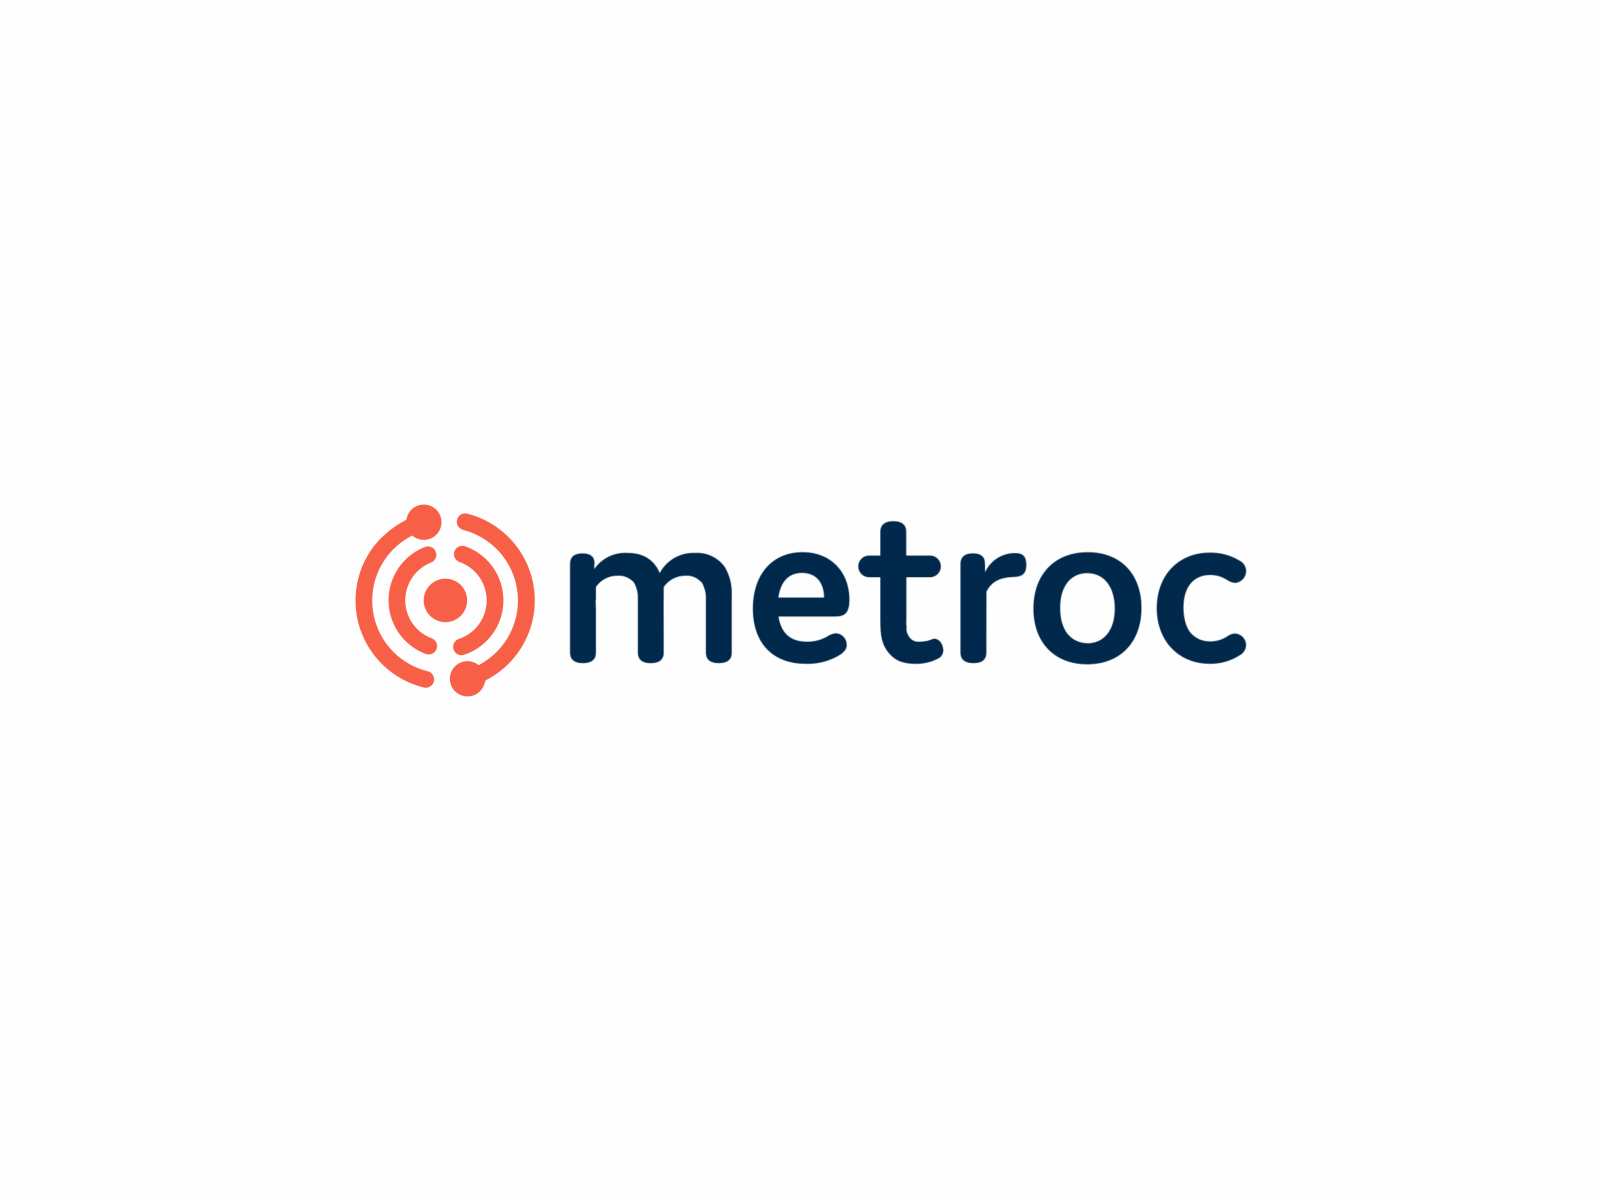 Metroc logo animation